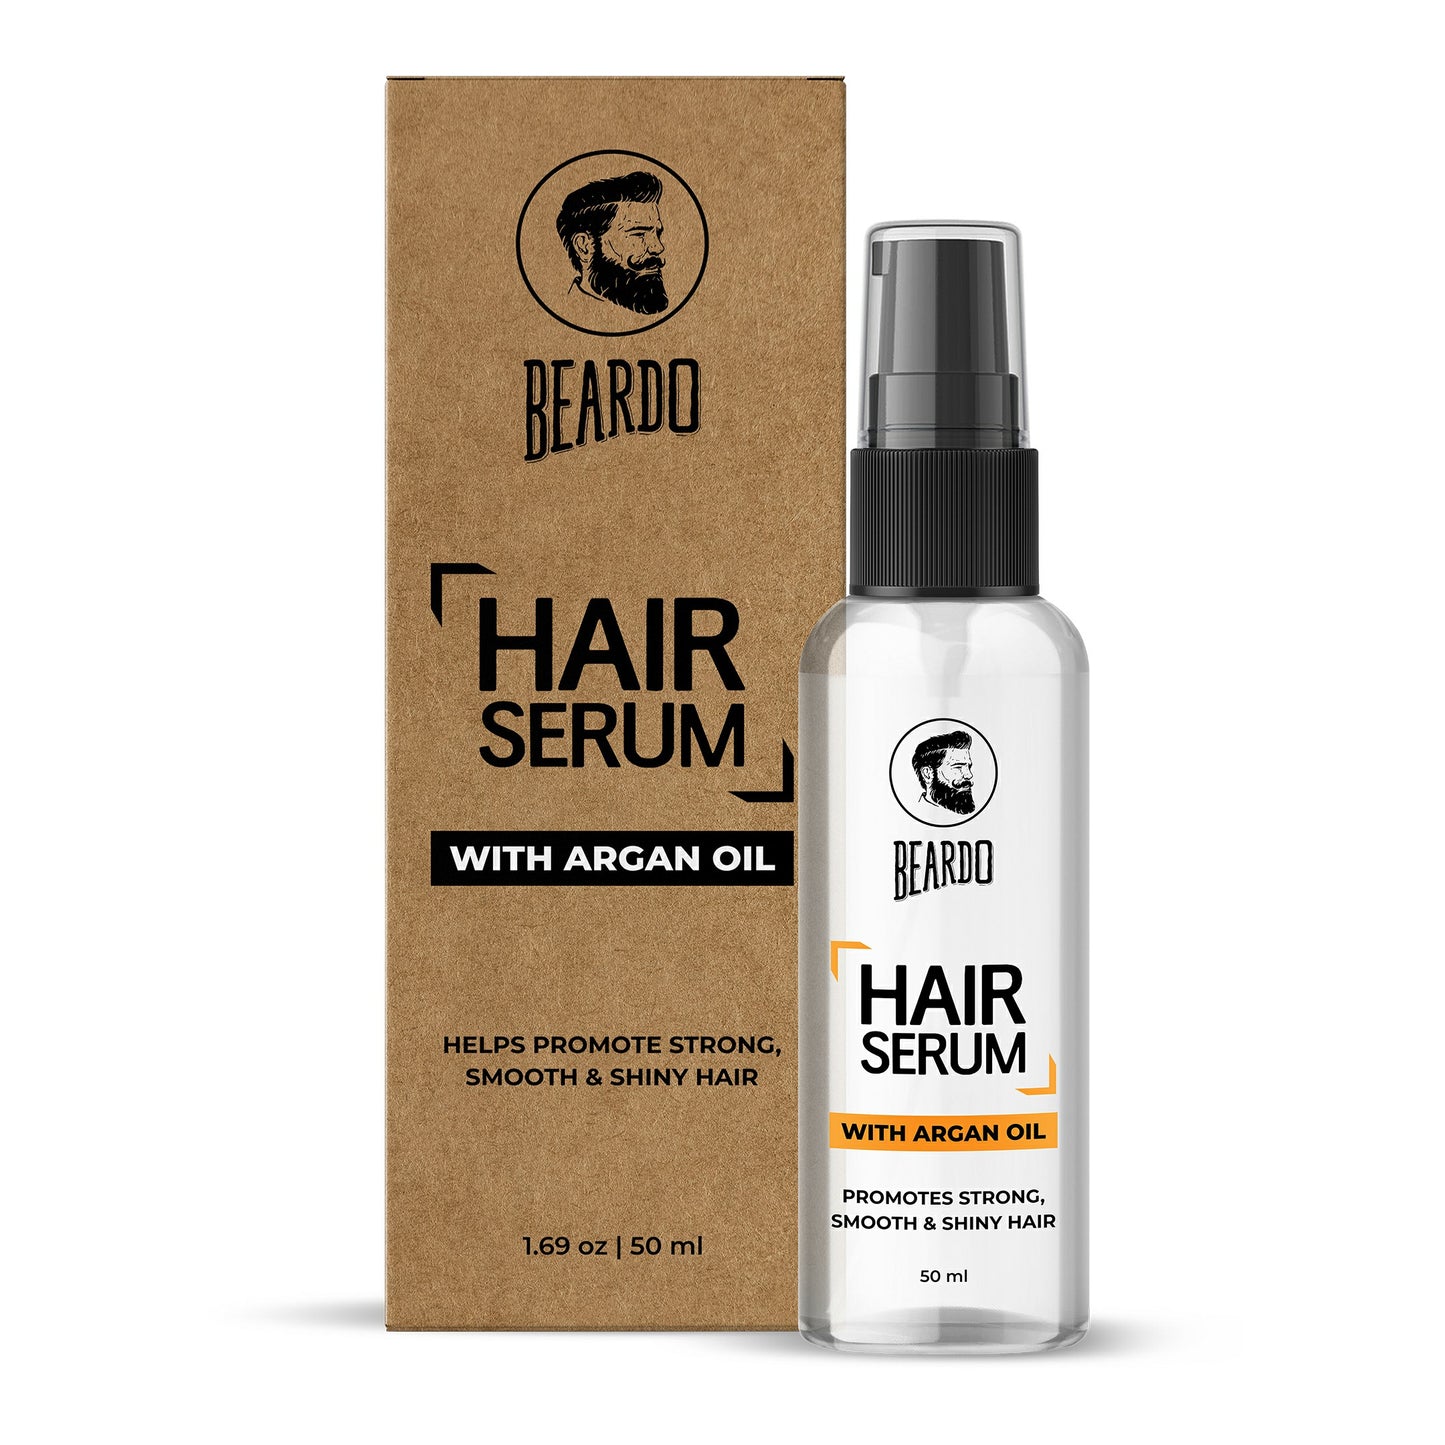 Beardo hair serum, hair serum for men, hair serum for frizzy hair, frizzy hair males, hair serum with argan oil